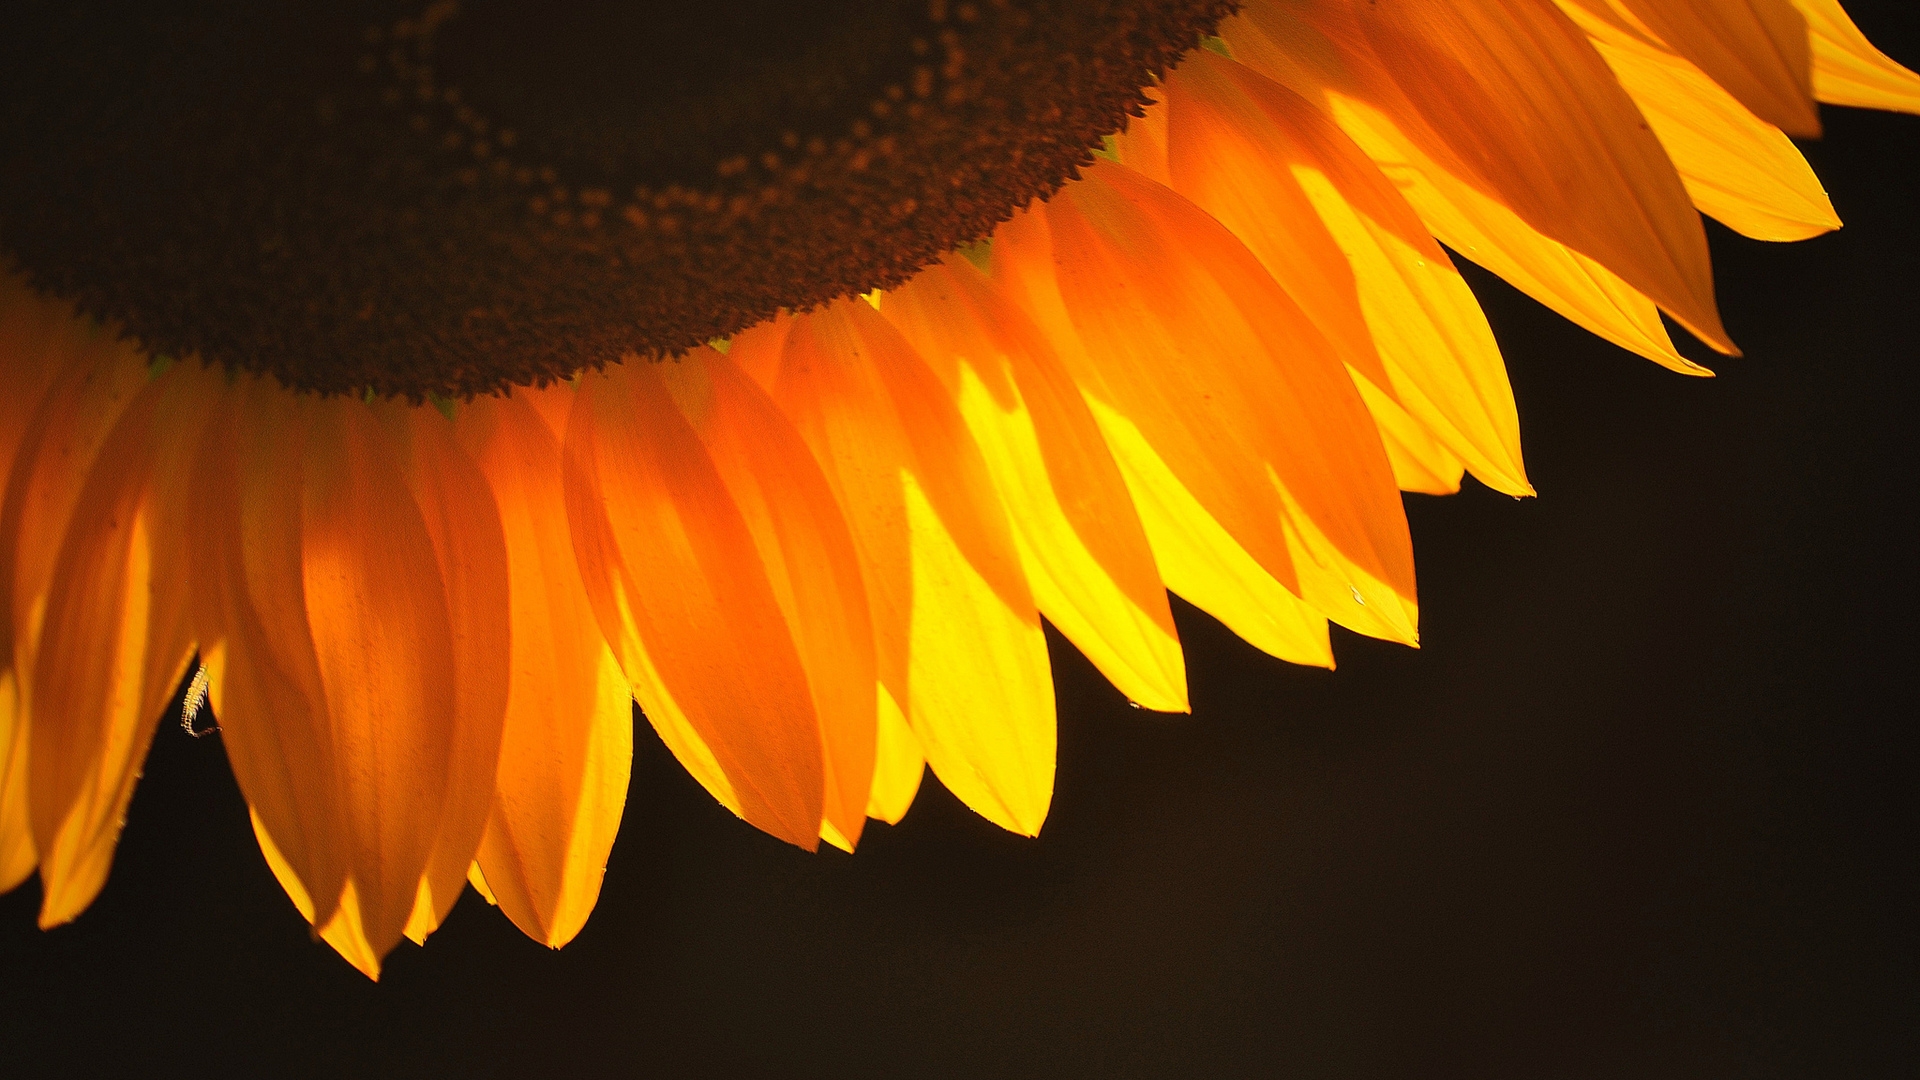 Sunflower Petals for 1920 x 1080 HDTV 1080p resolution